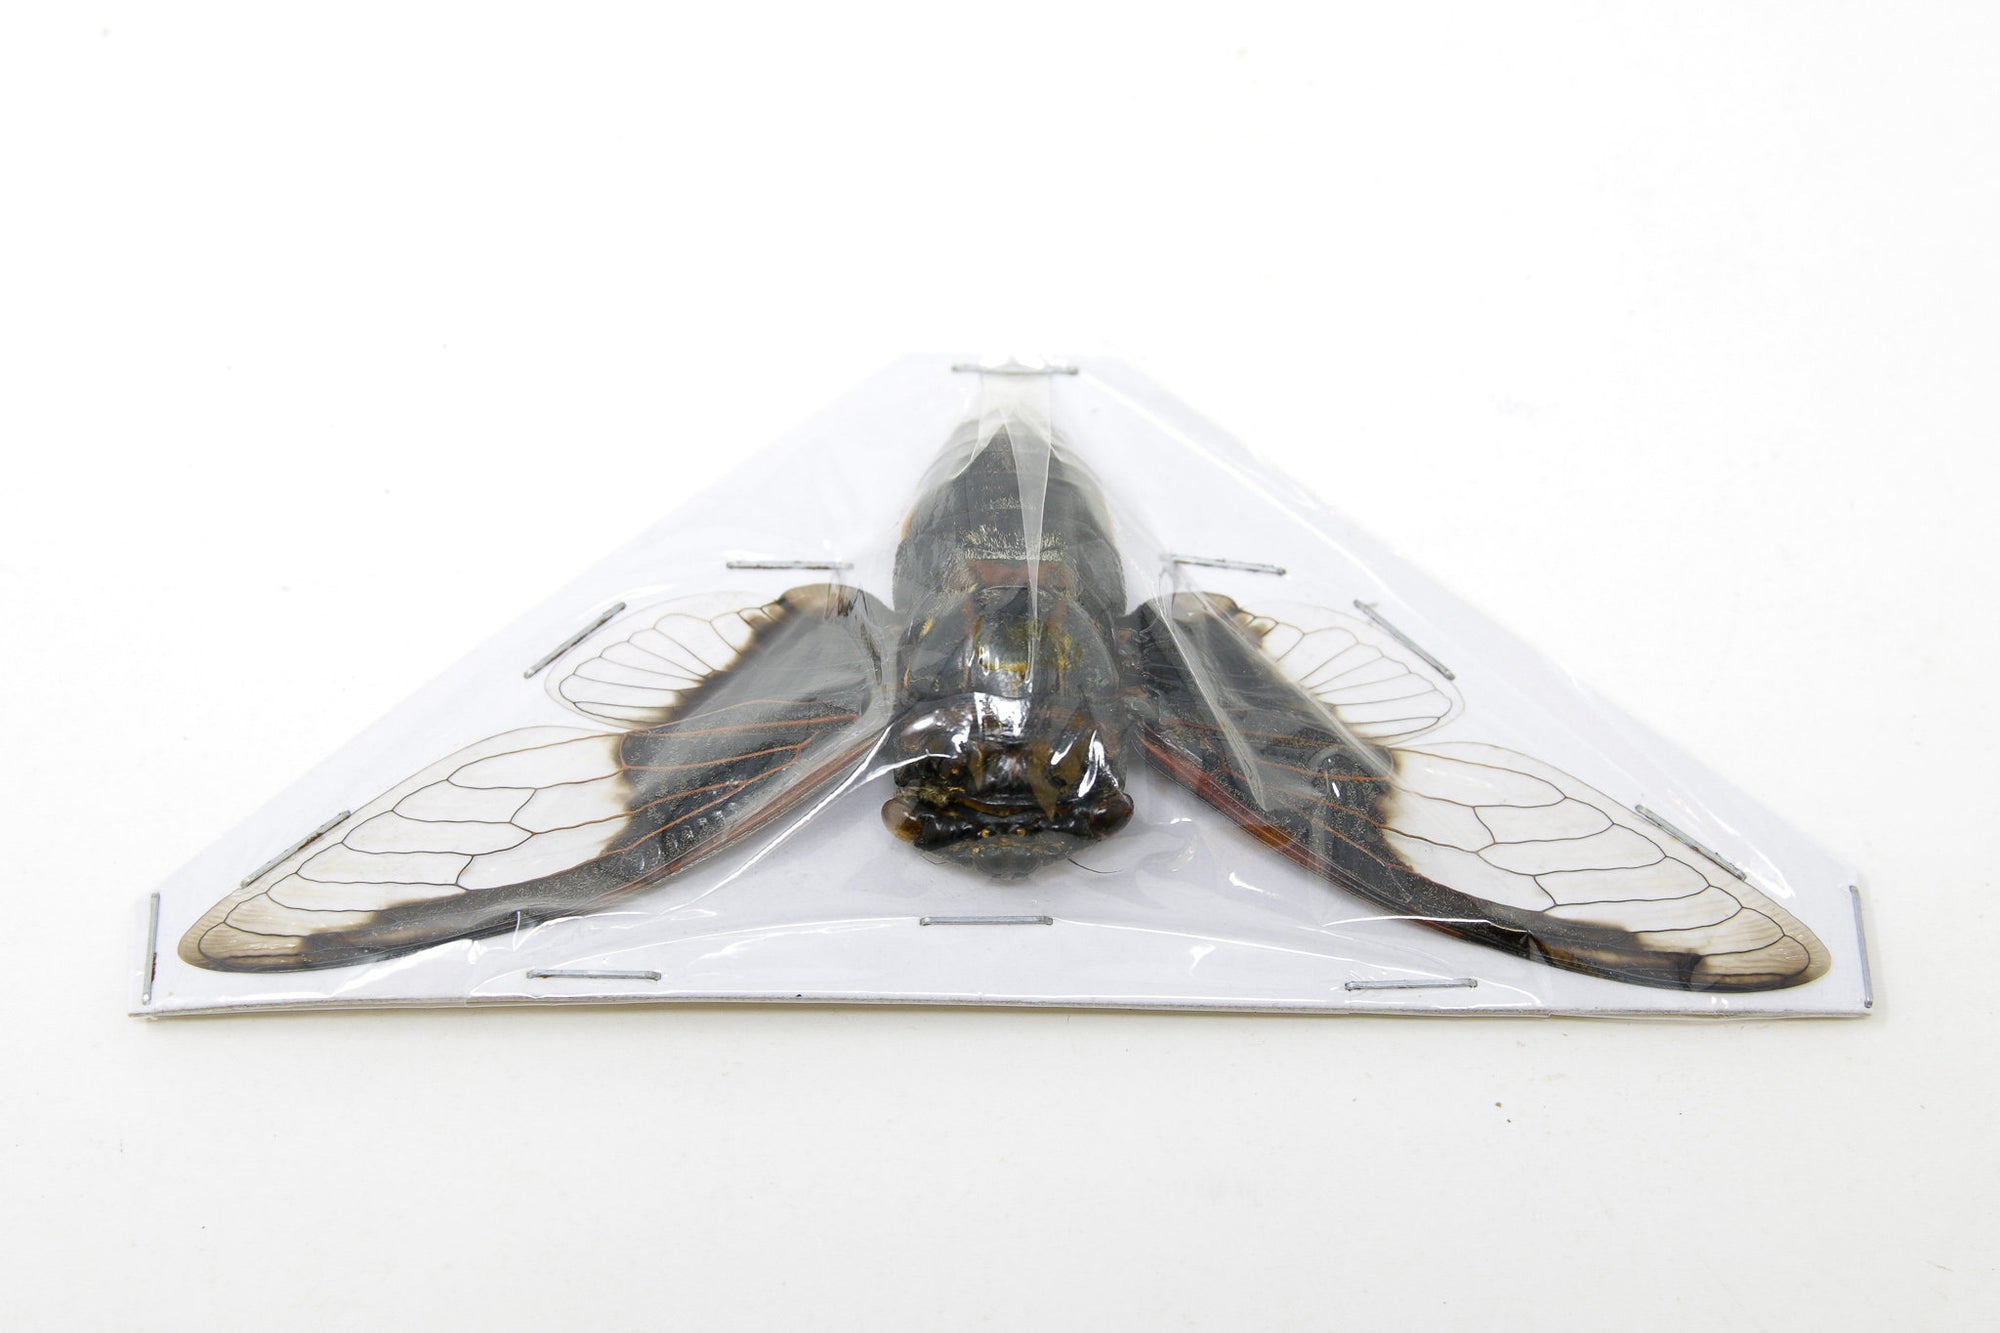 2 x Cryptotympana aquila | Black & White Cicada 100mm | A1 Unmounted Specimen